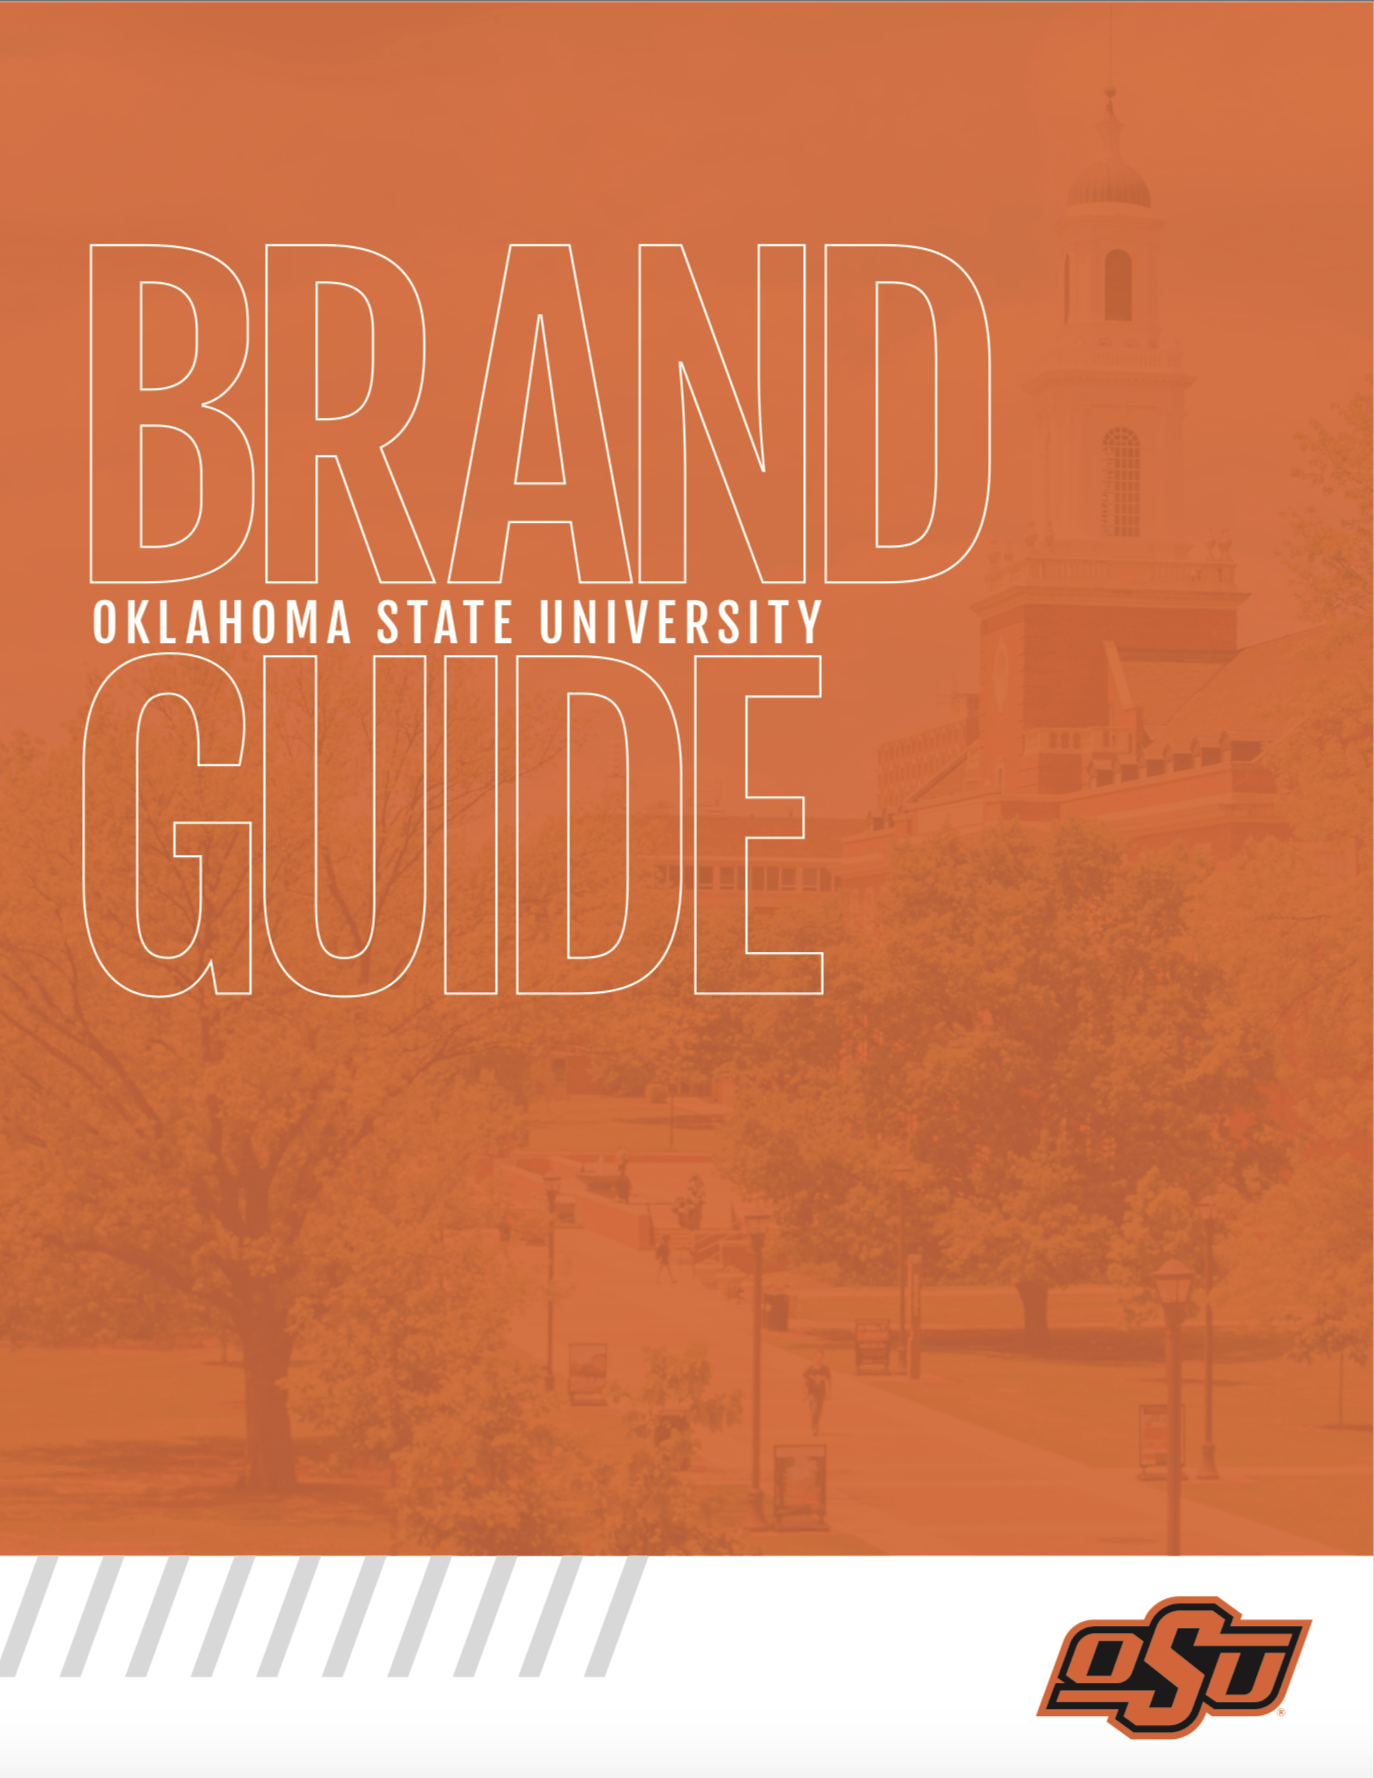 The Oklahoma State University Rebrand: One University, One Logo for All - Logo - https://s41078.pcdn.co/wp-content/uploads/2020/08/Branding-or-Rebranding_Oklahoma-State.png